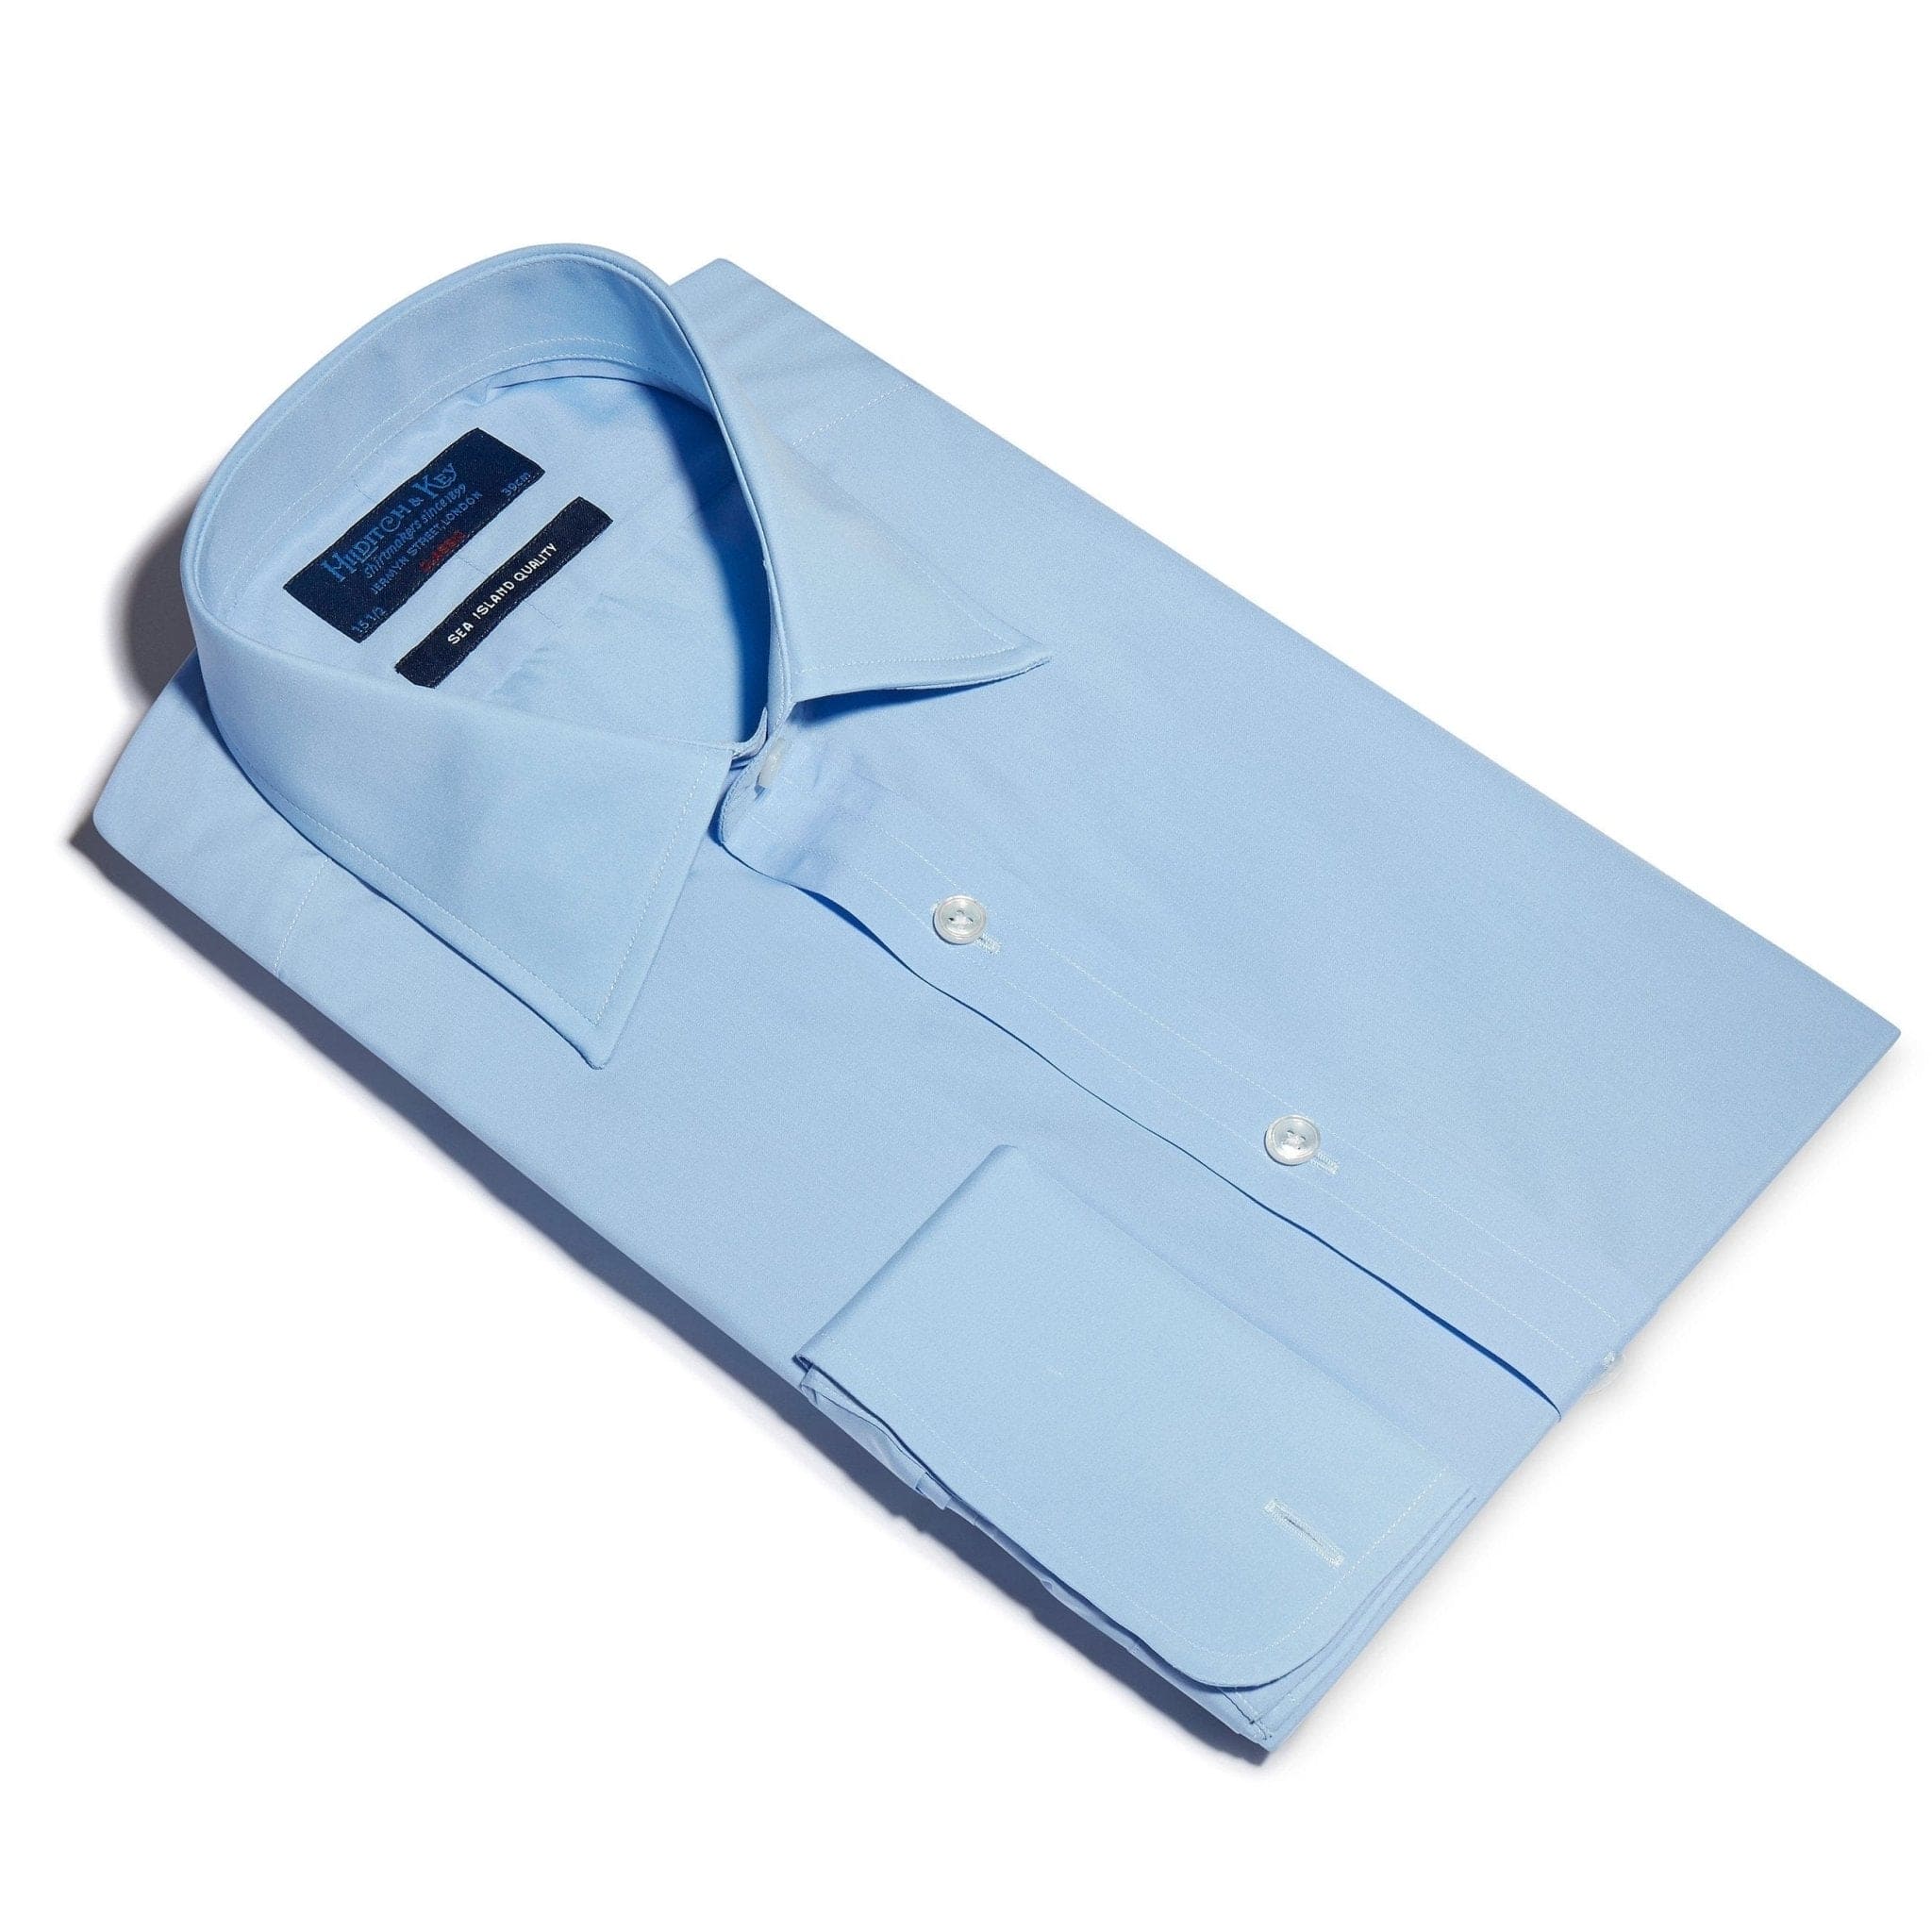 Classic Fit, Classic Collar, Double Cuff Shirt in a Plain Blue Sea Island Quality Poplin Cotton - Hilditch & Key